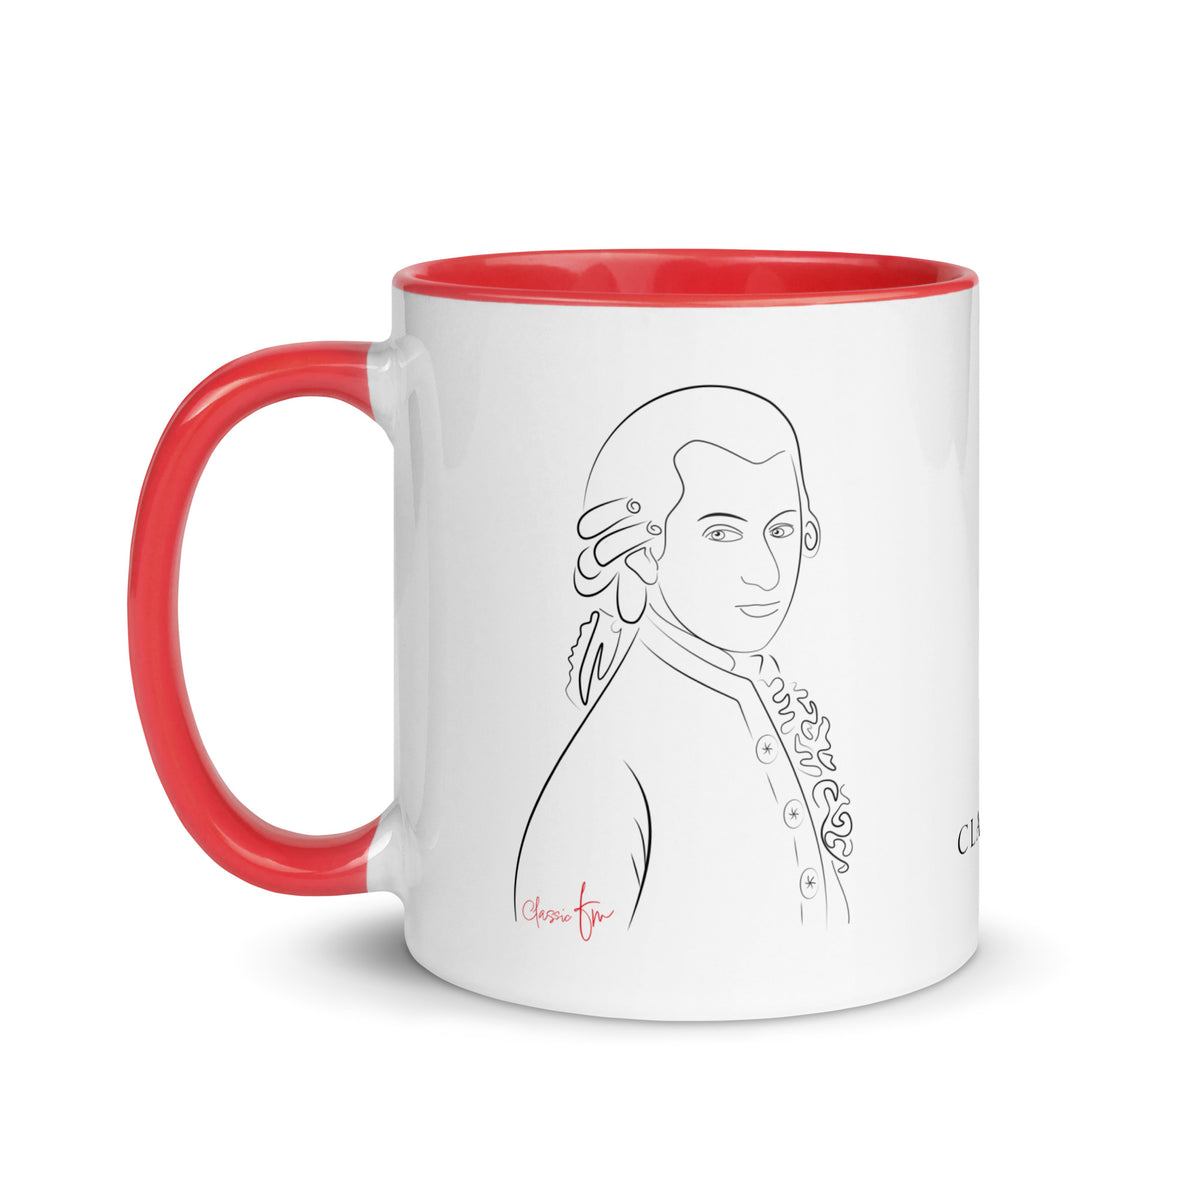 Mozart Mug